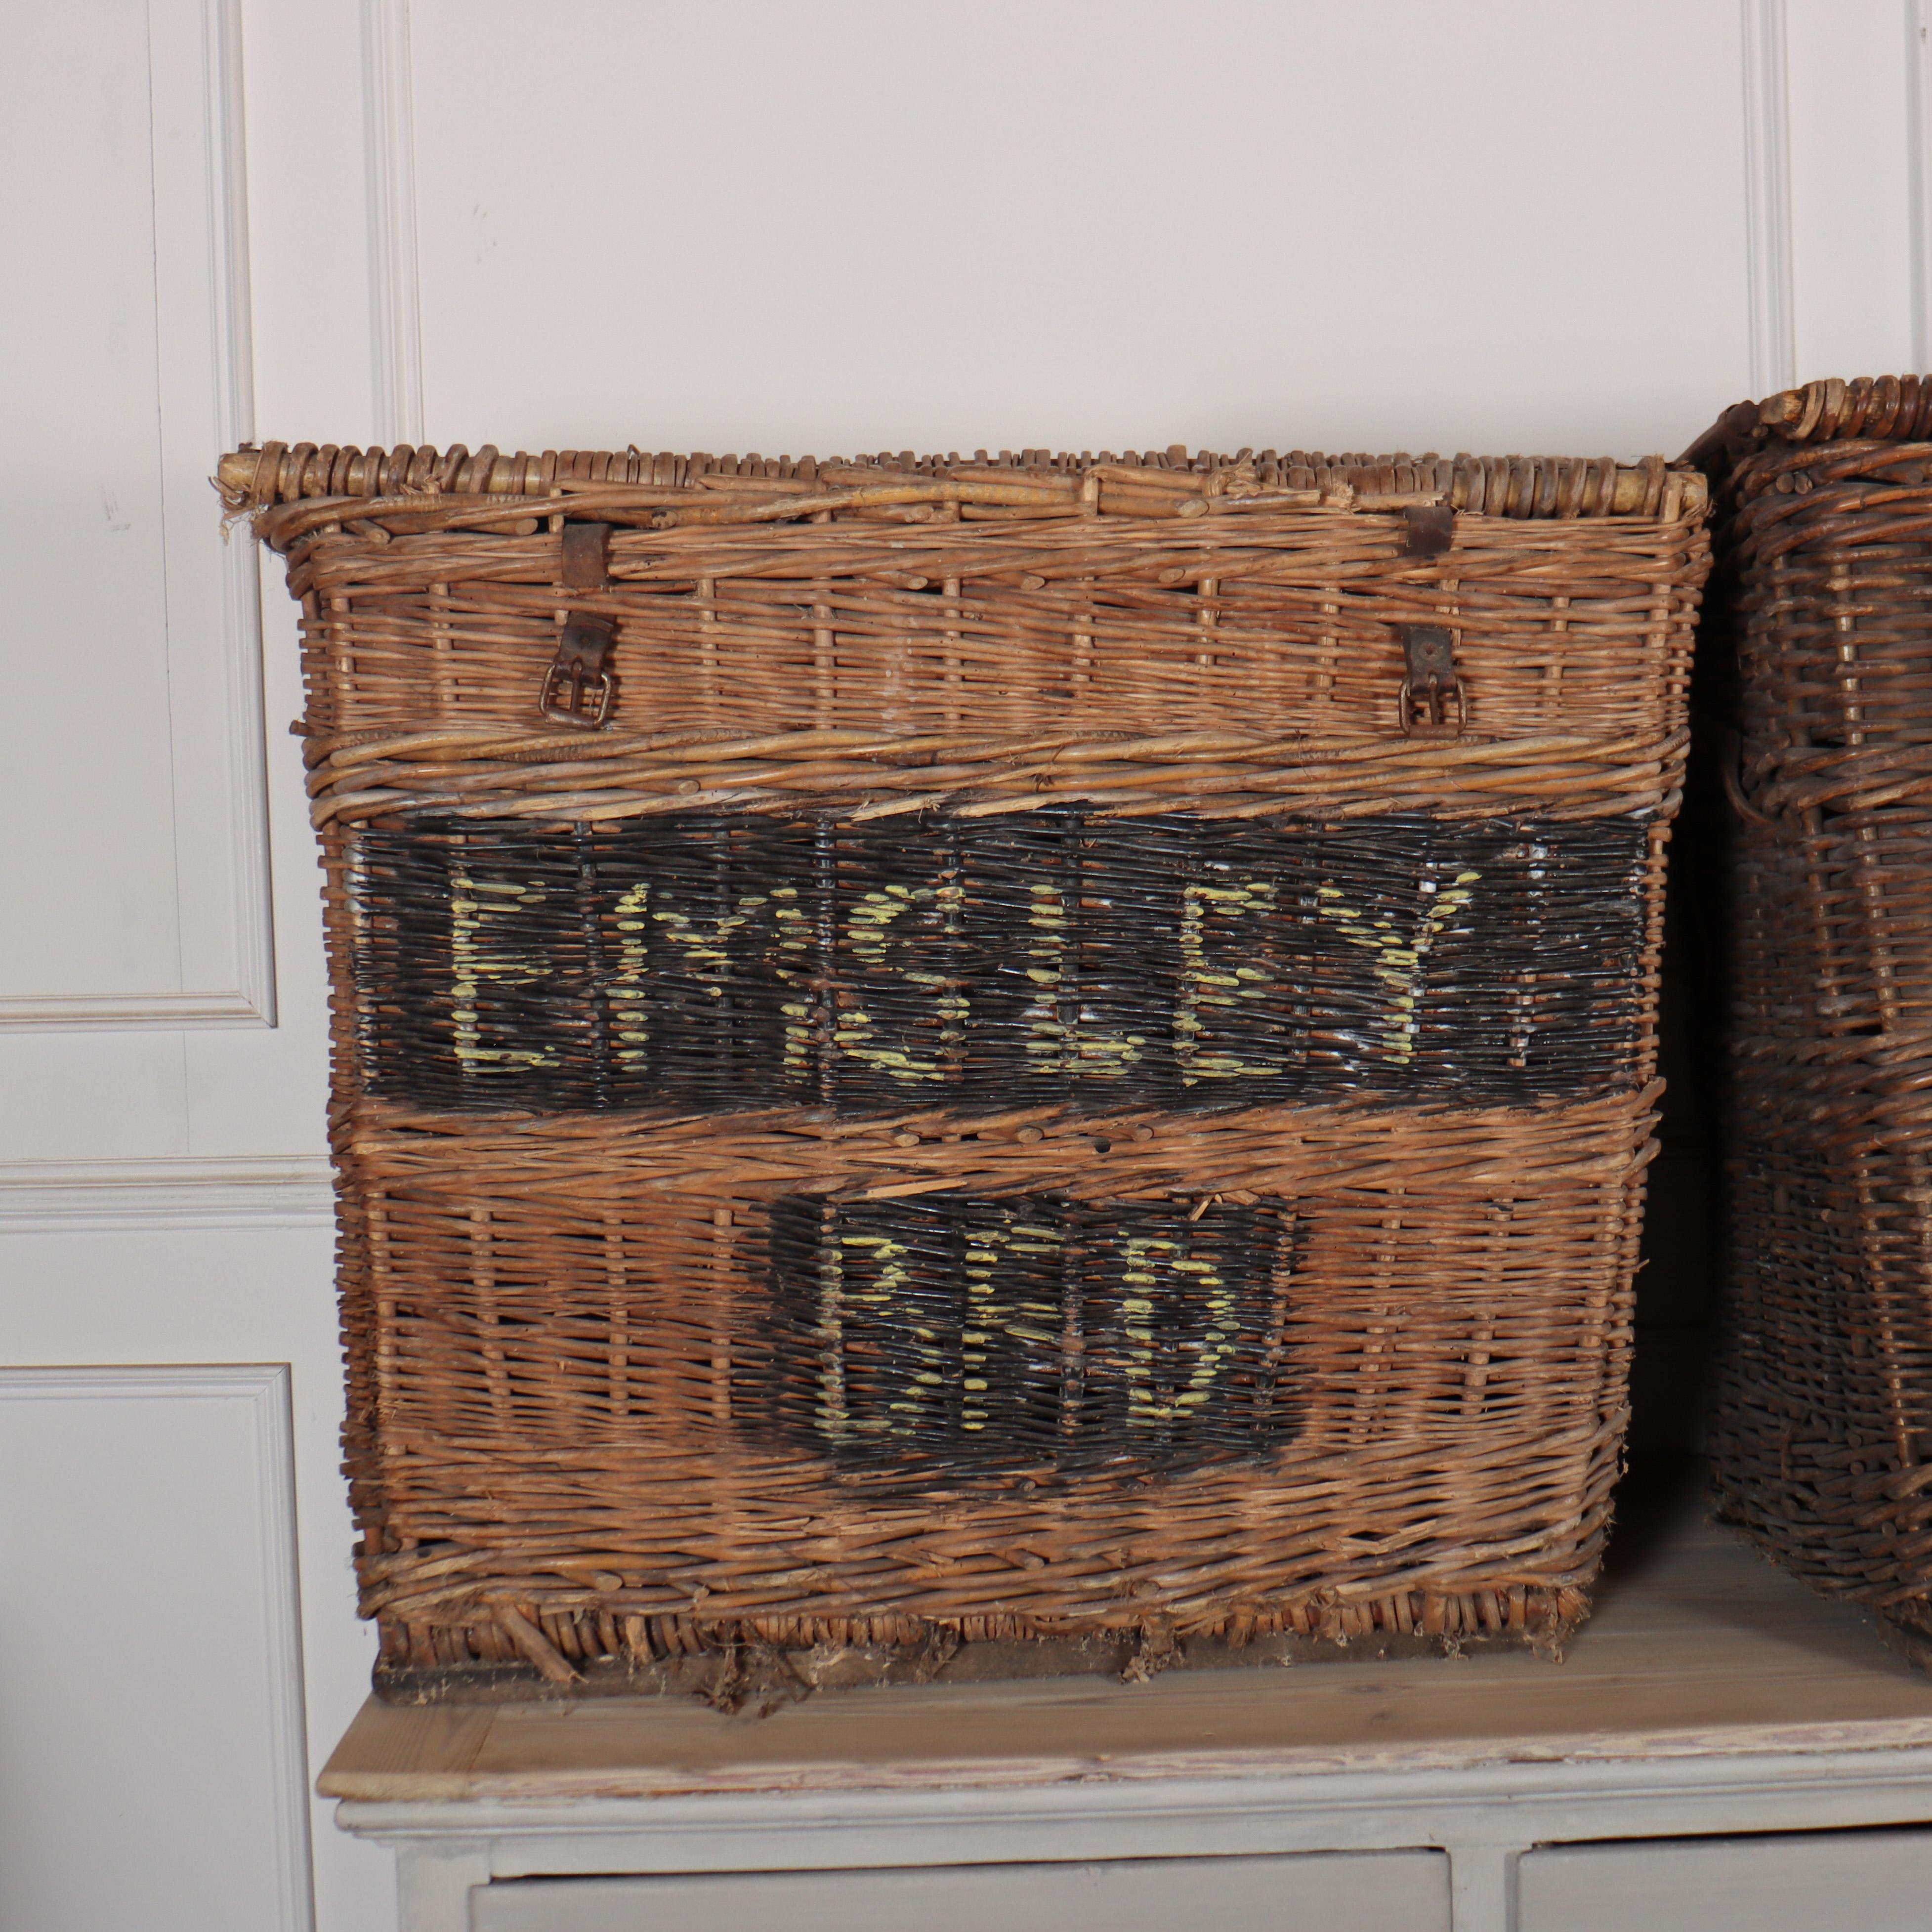 Good collection of mill baskets. Would make wonderful log baskets. 1900.

Largest basket: 34.5